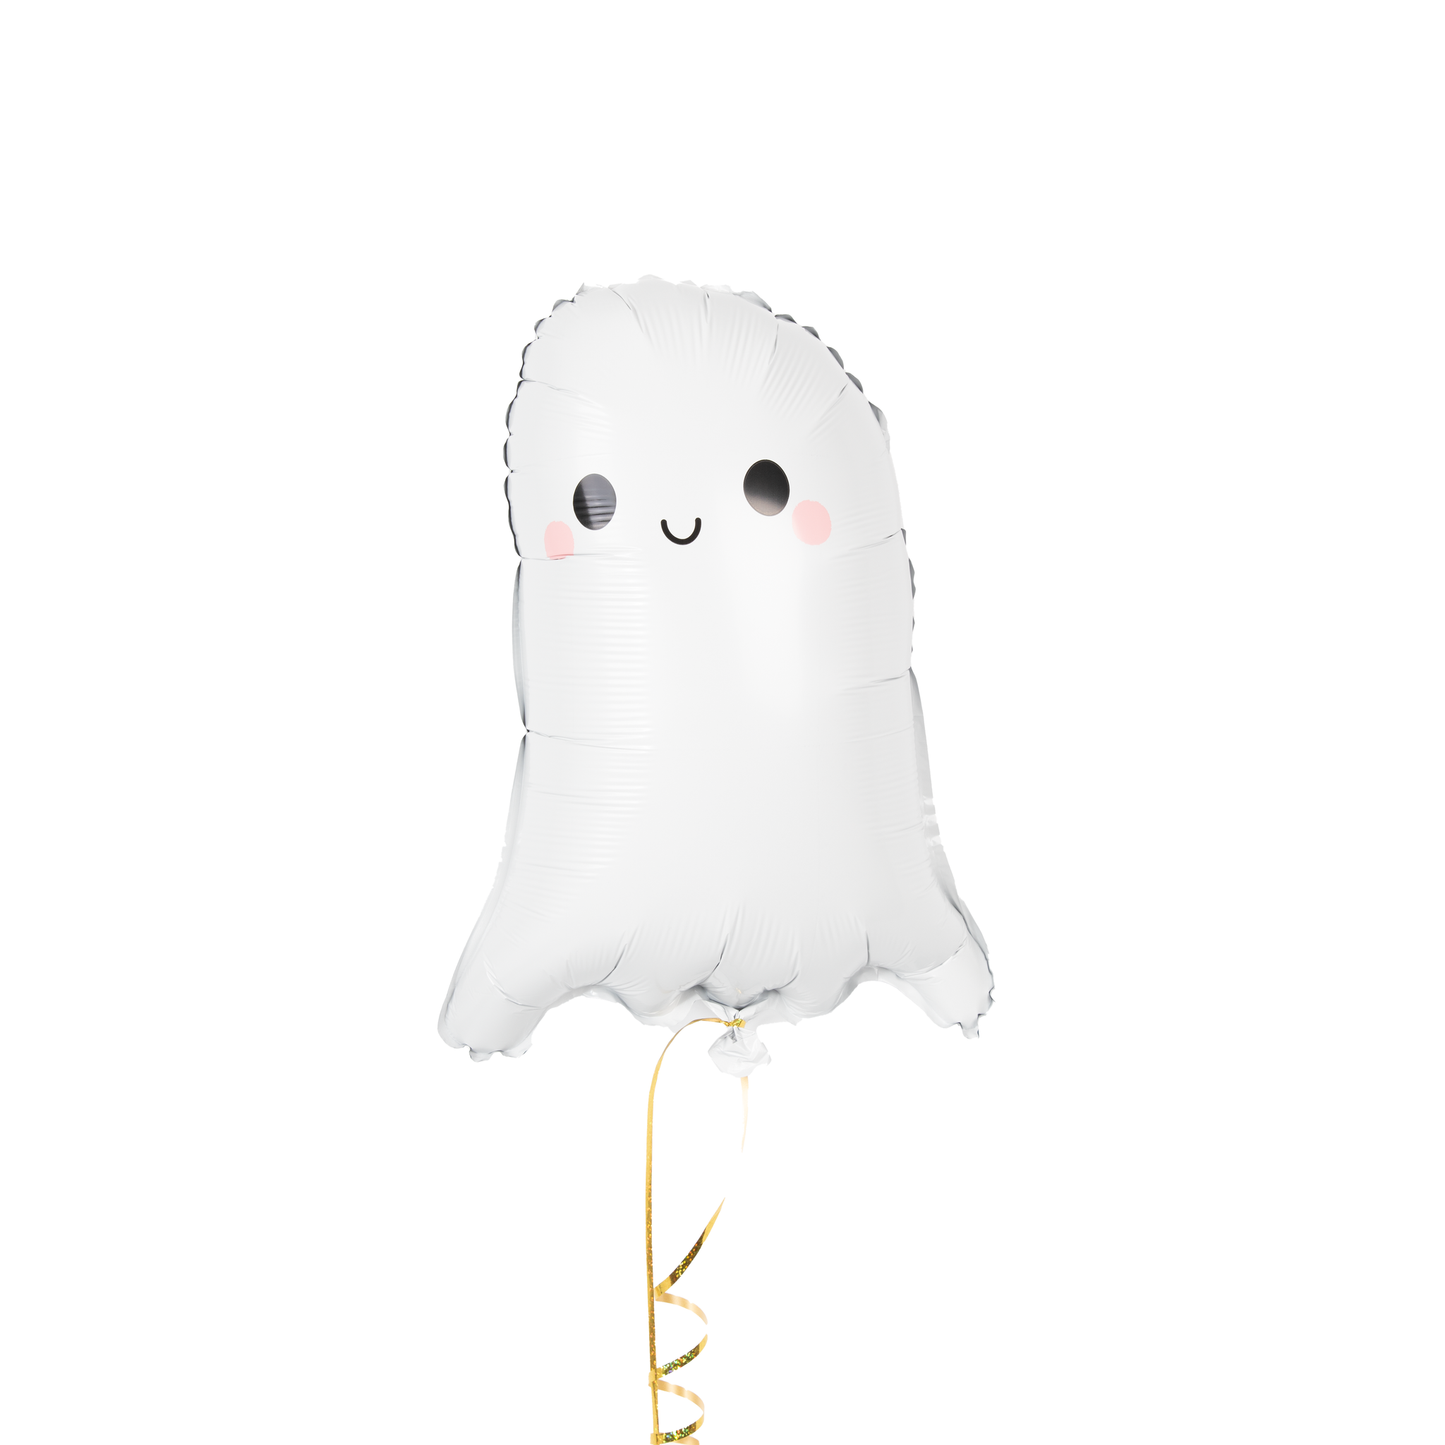 19" Ghost Foil Balloon